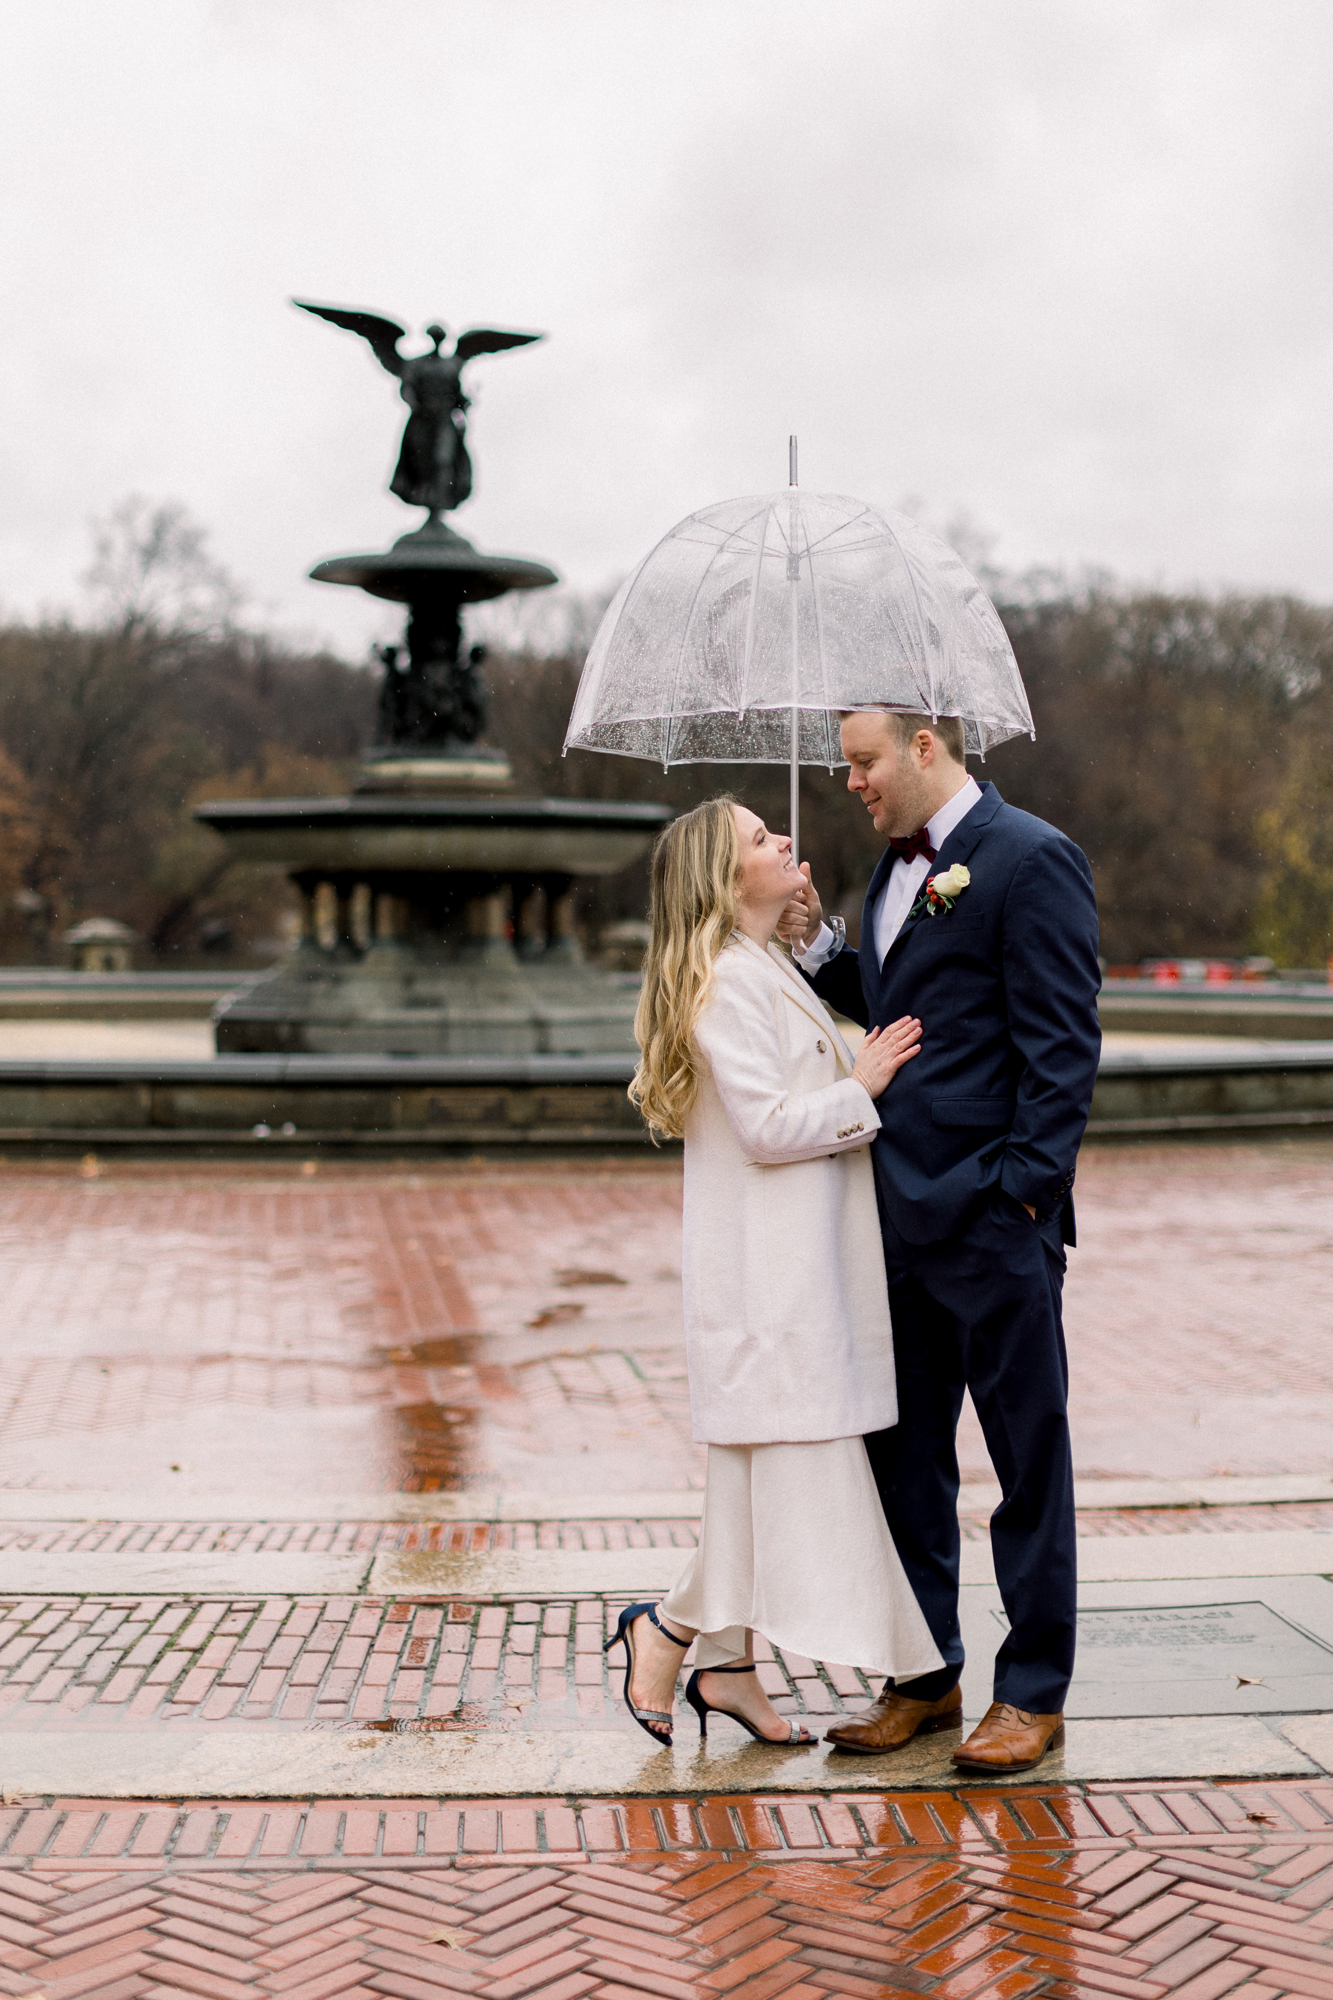 Rainy wedding photos at Bethesda Terrace in New York